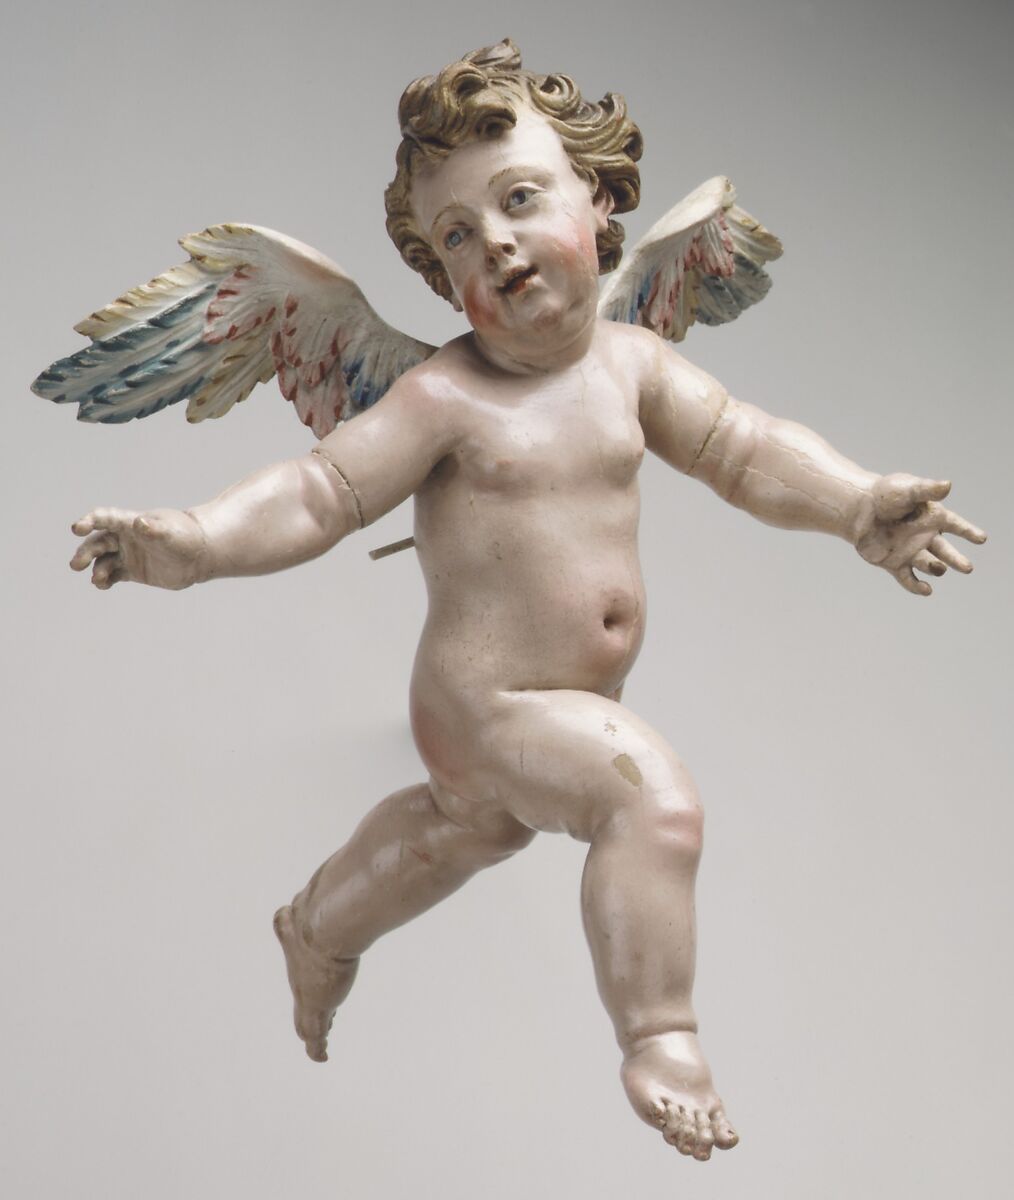 Winged cherub, Polychromed wood, Italian, Naples